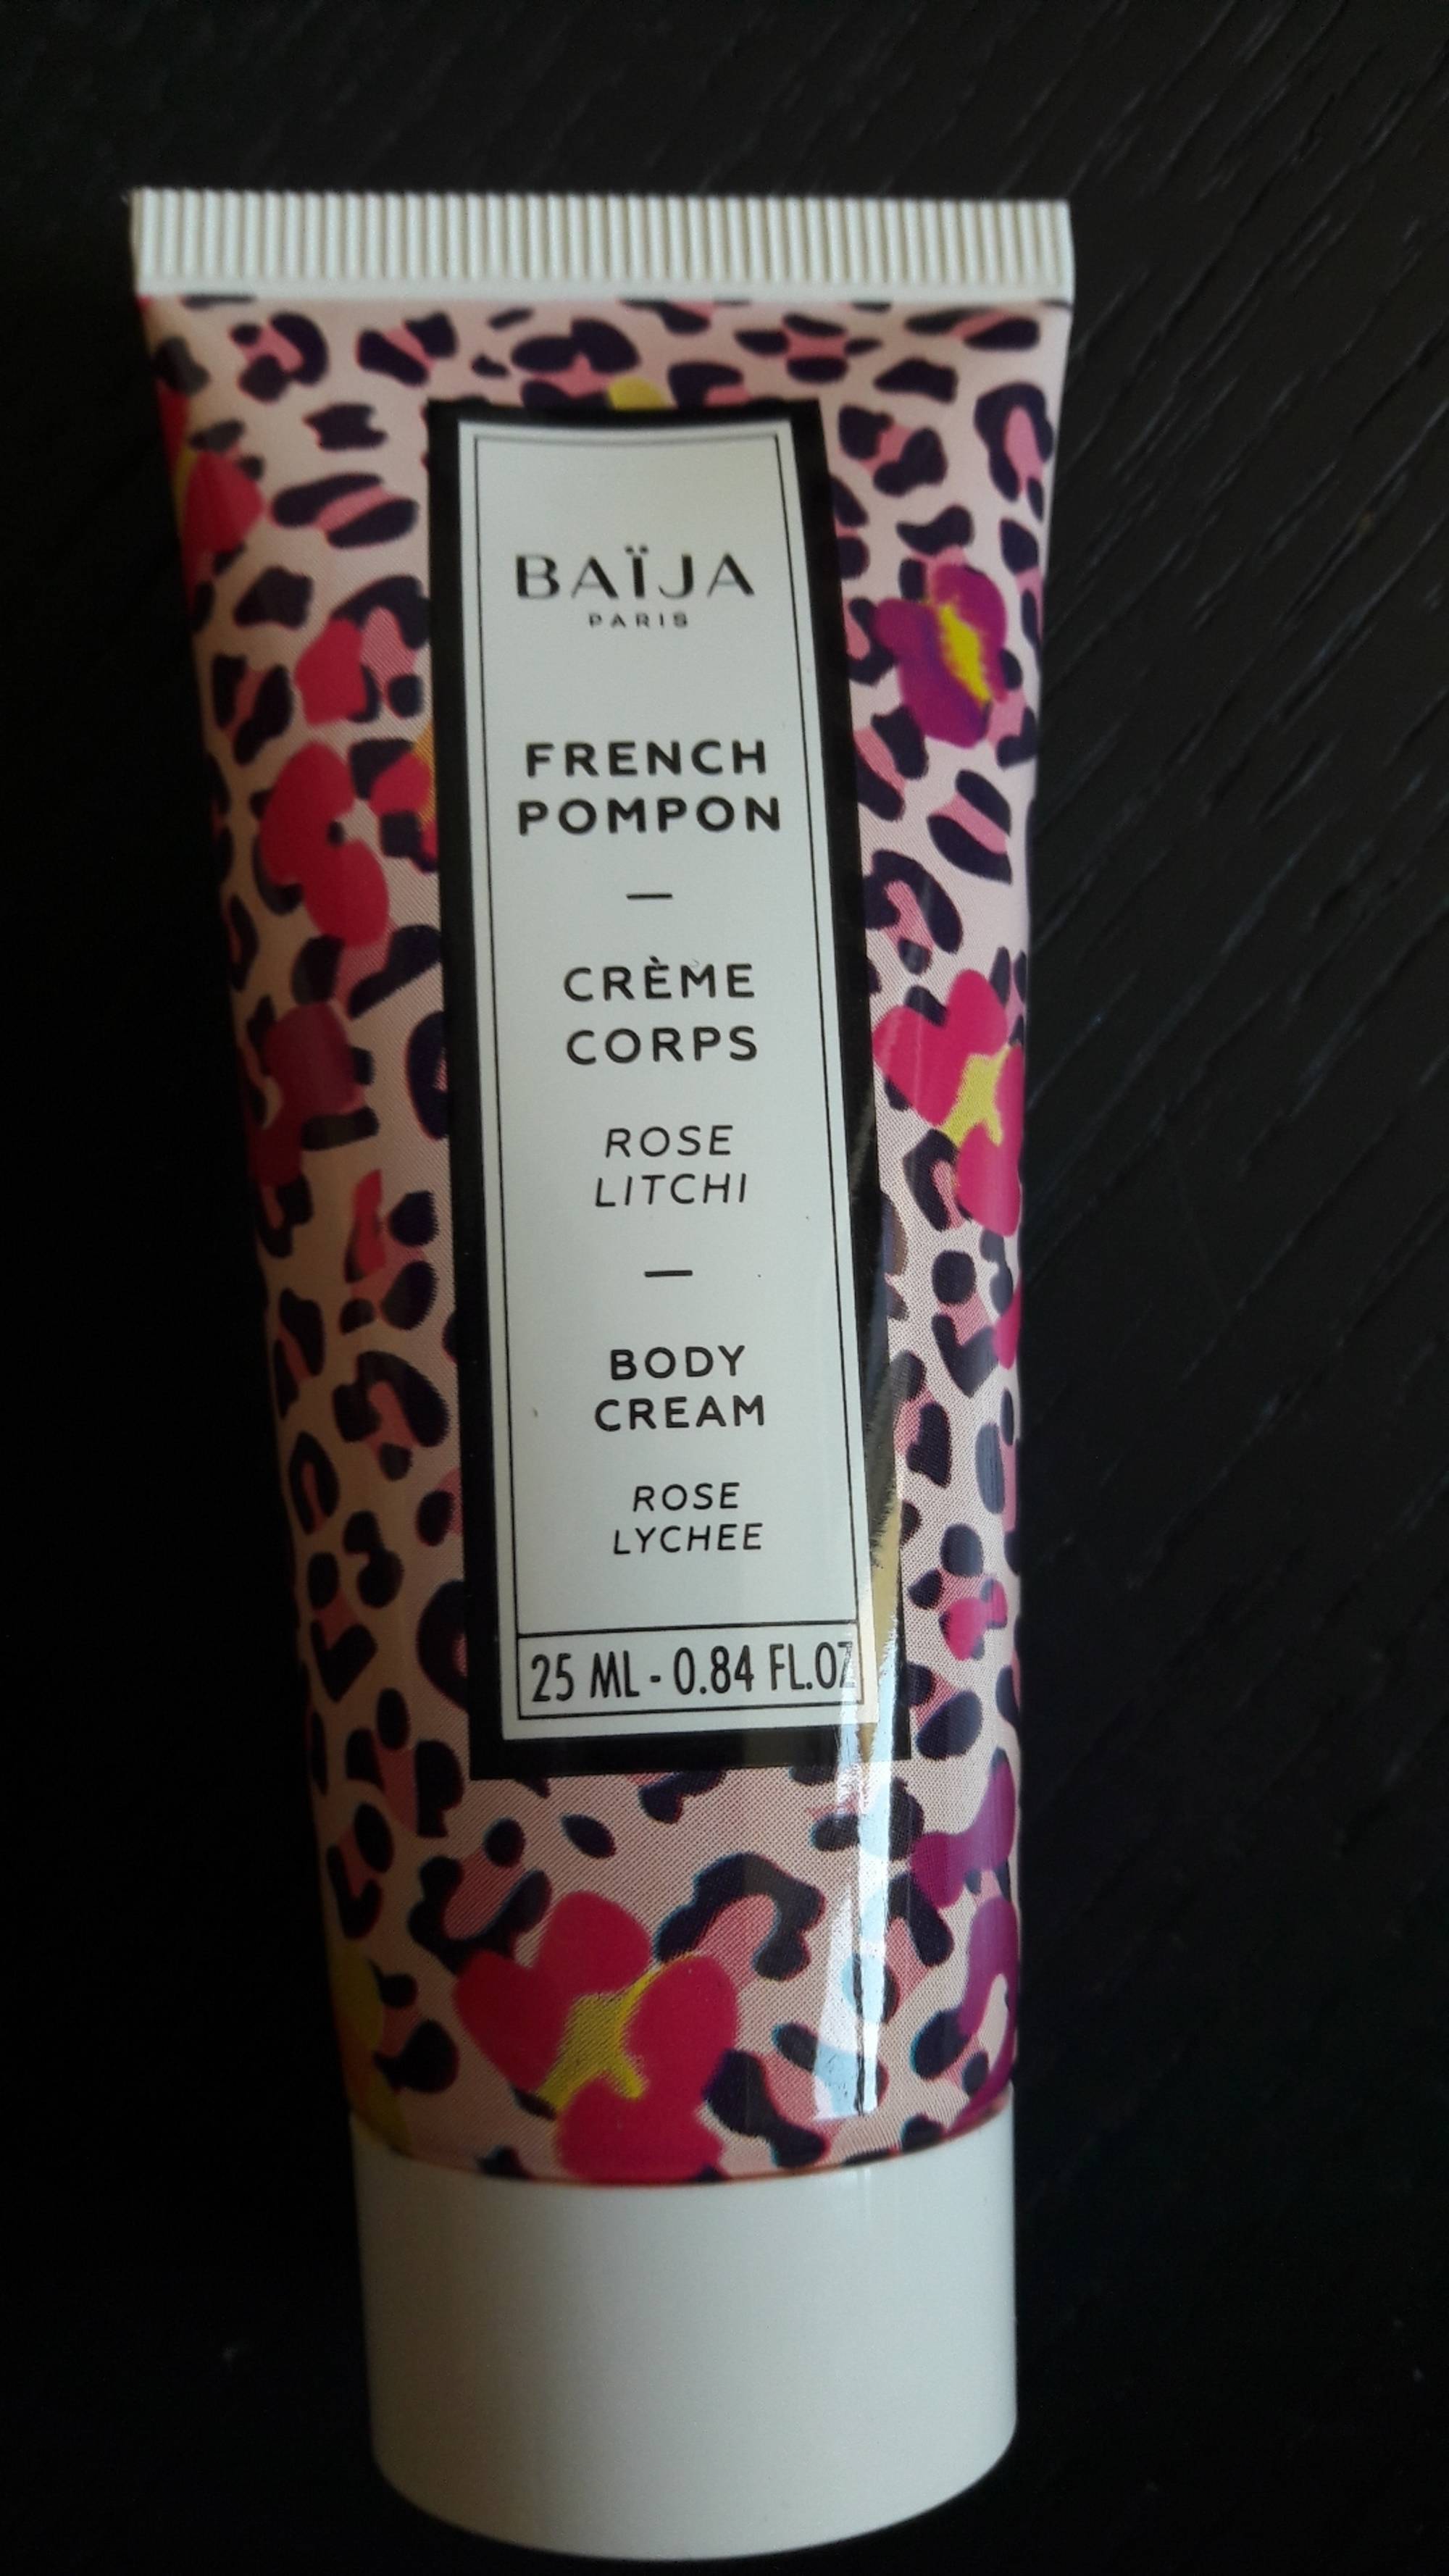 BAIJA - French pompon - Crème corps rose litchi